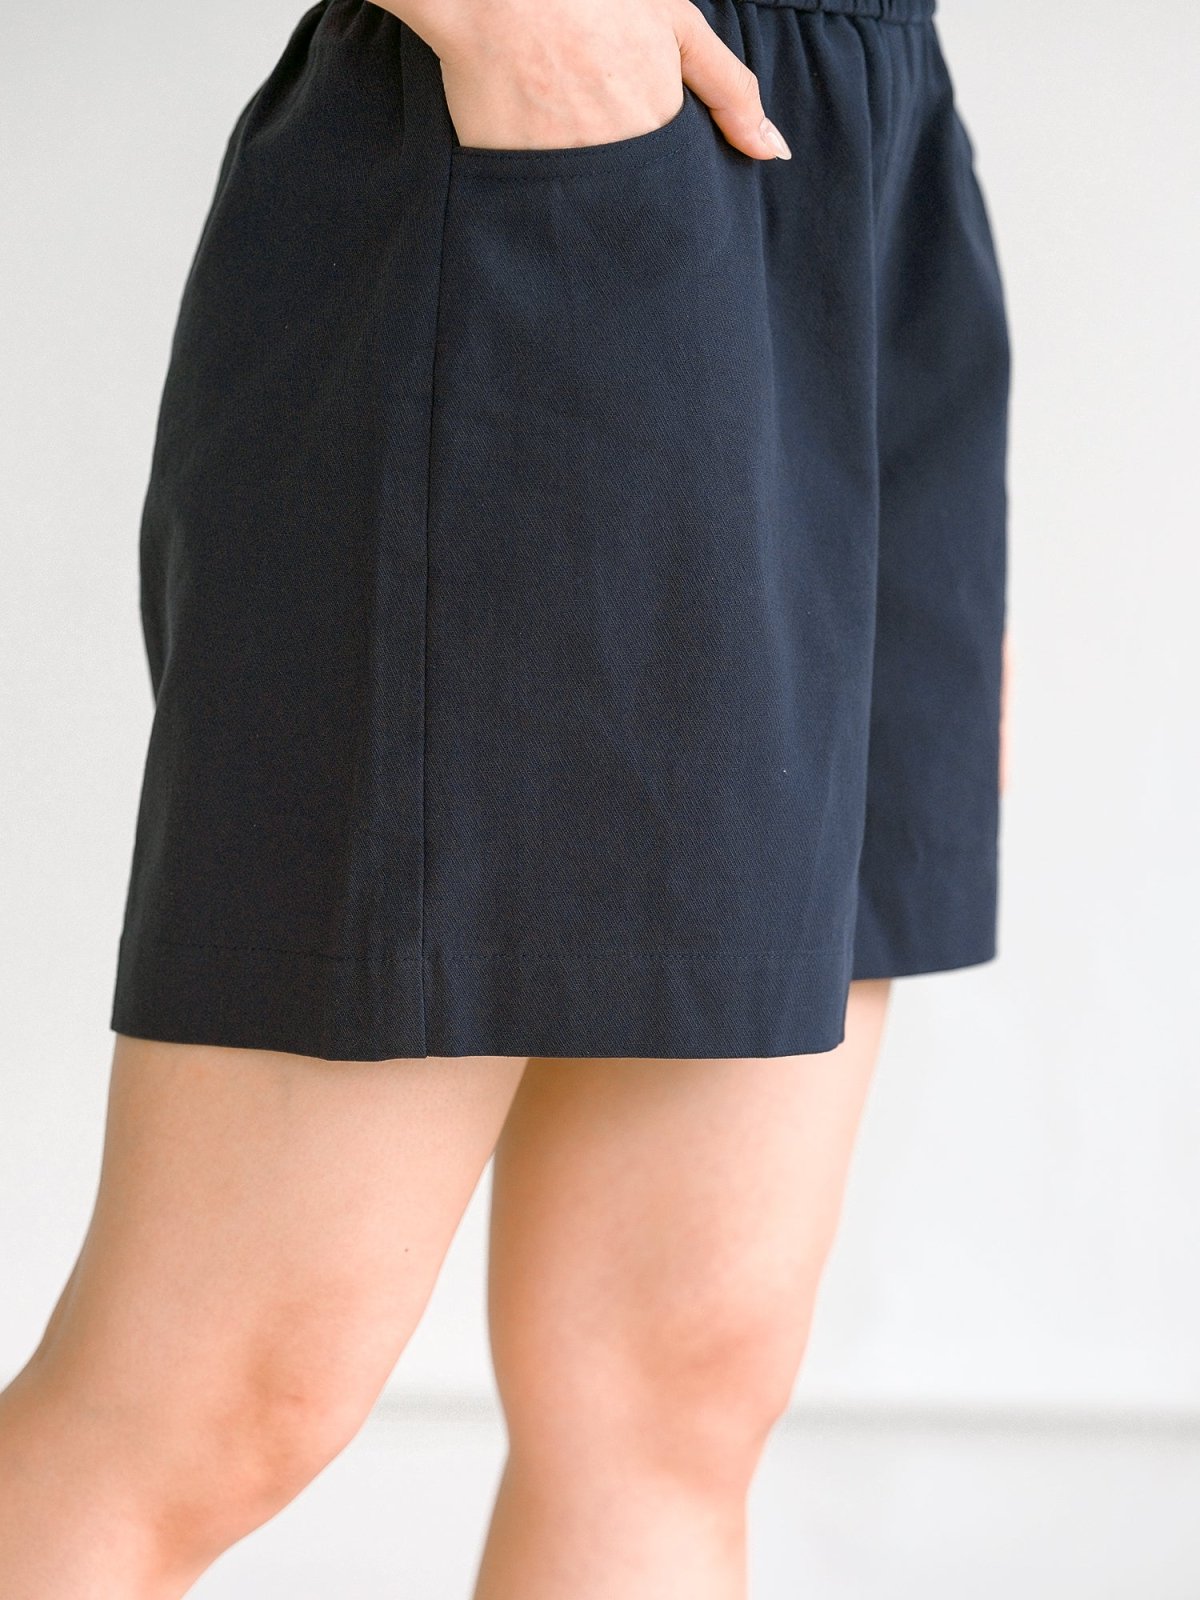 Hannah Elastic Cotton Shorts - DAG-G-220174BlueF - Navy Blue - F - D'ZAGE Designs